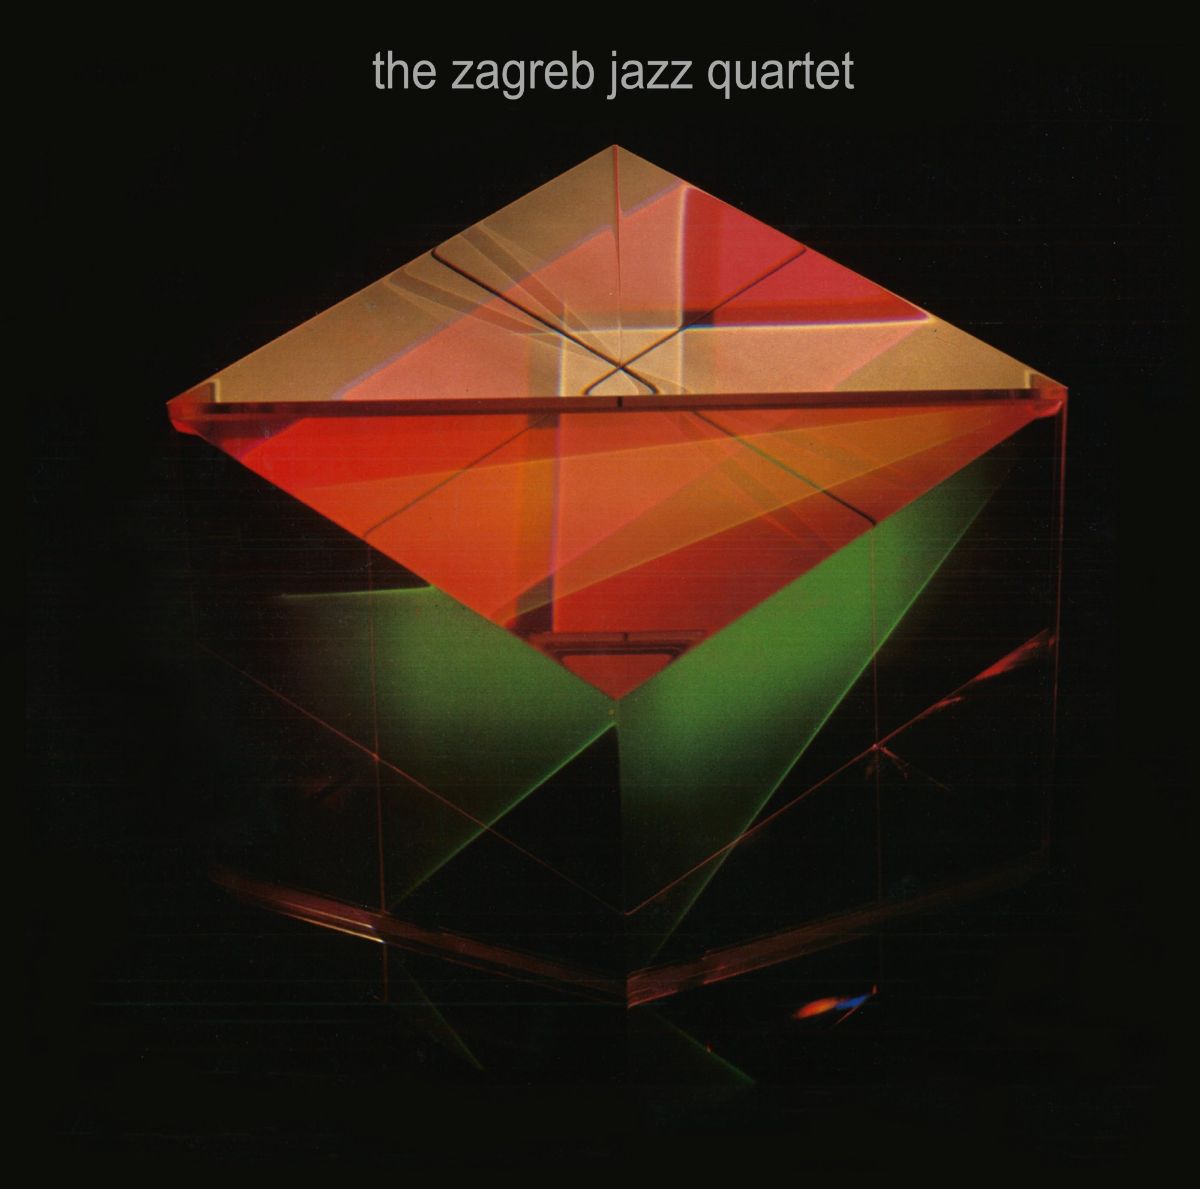 Kultni album Zagrebačkog jazz kvarteta objavljen na CD-u, uskoro i na vinilu